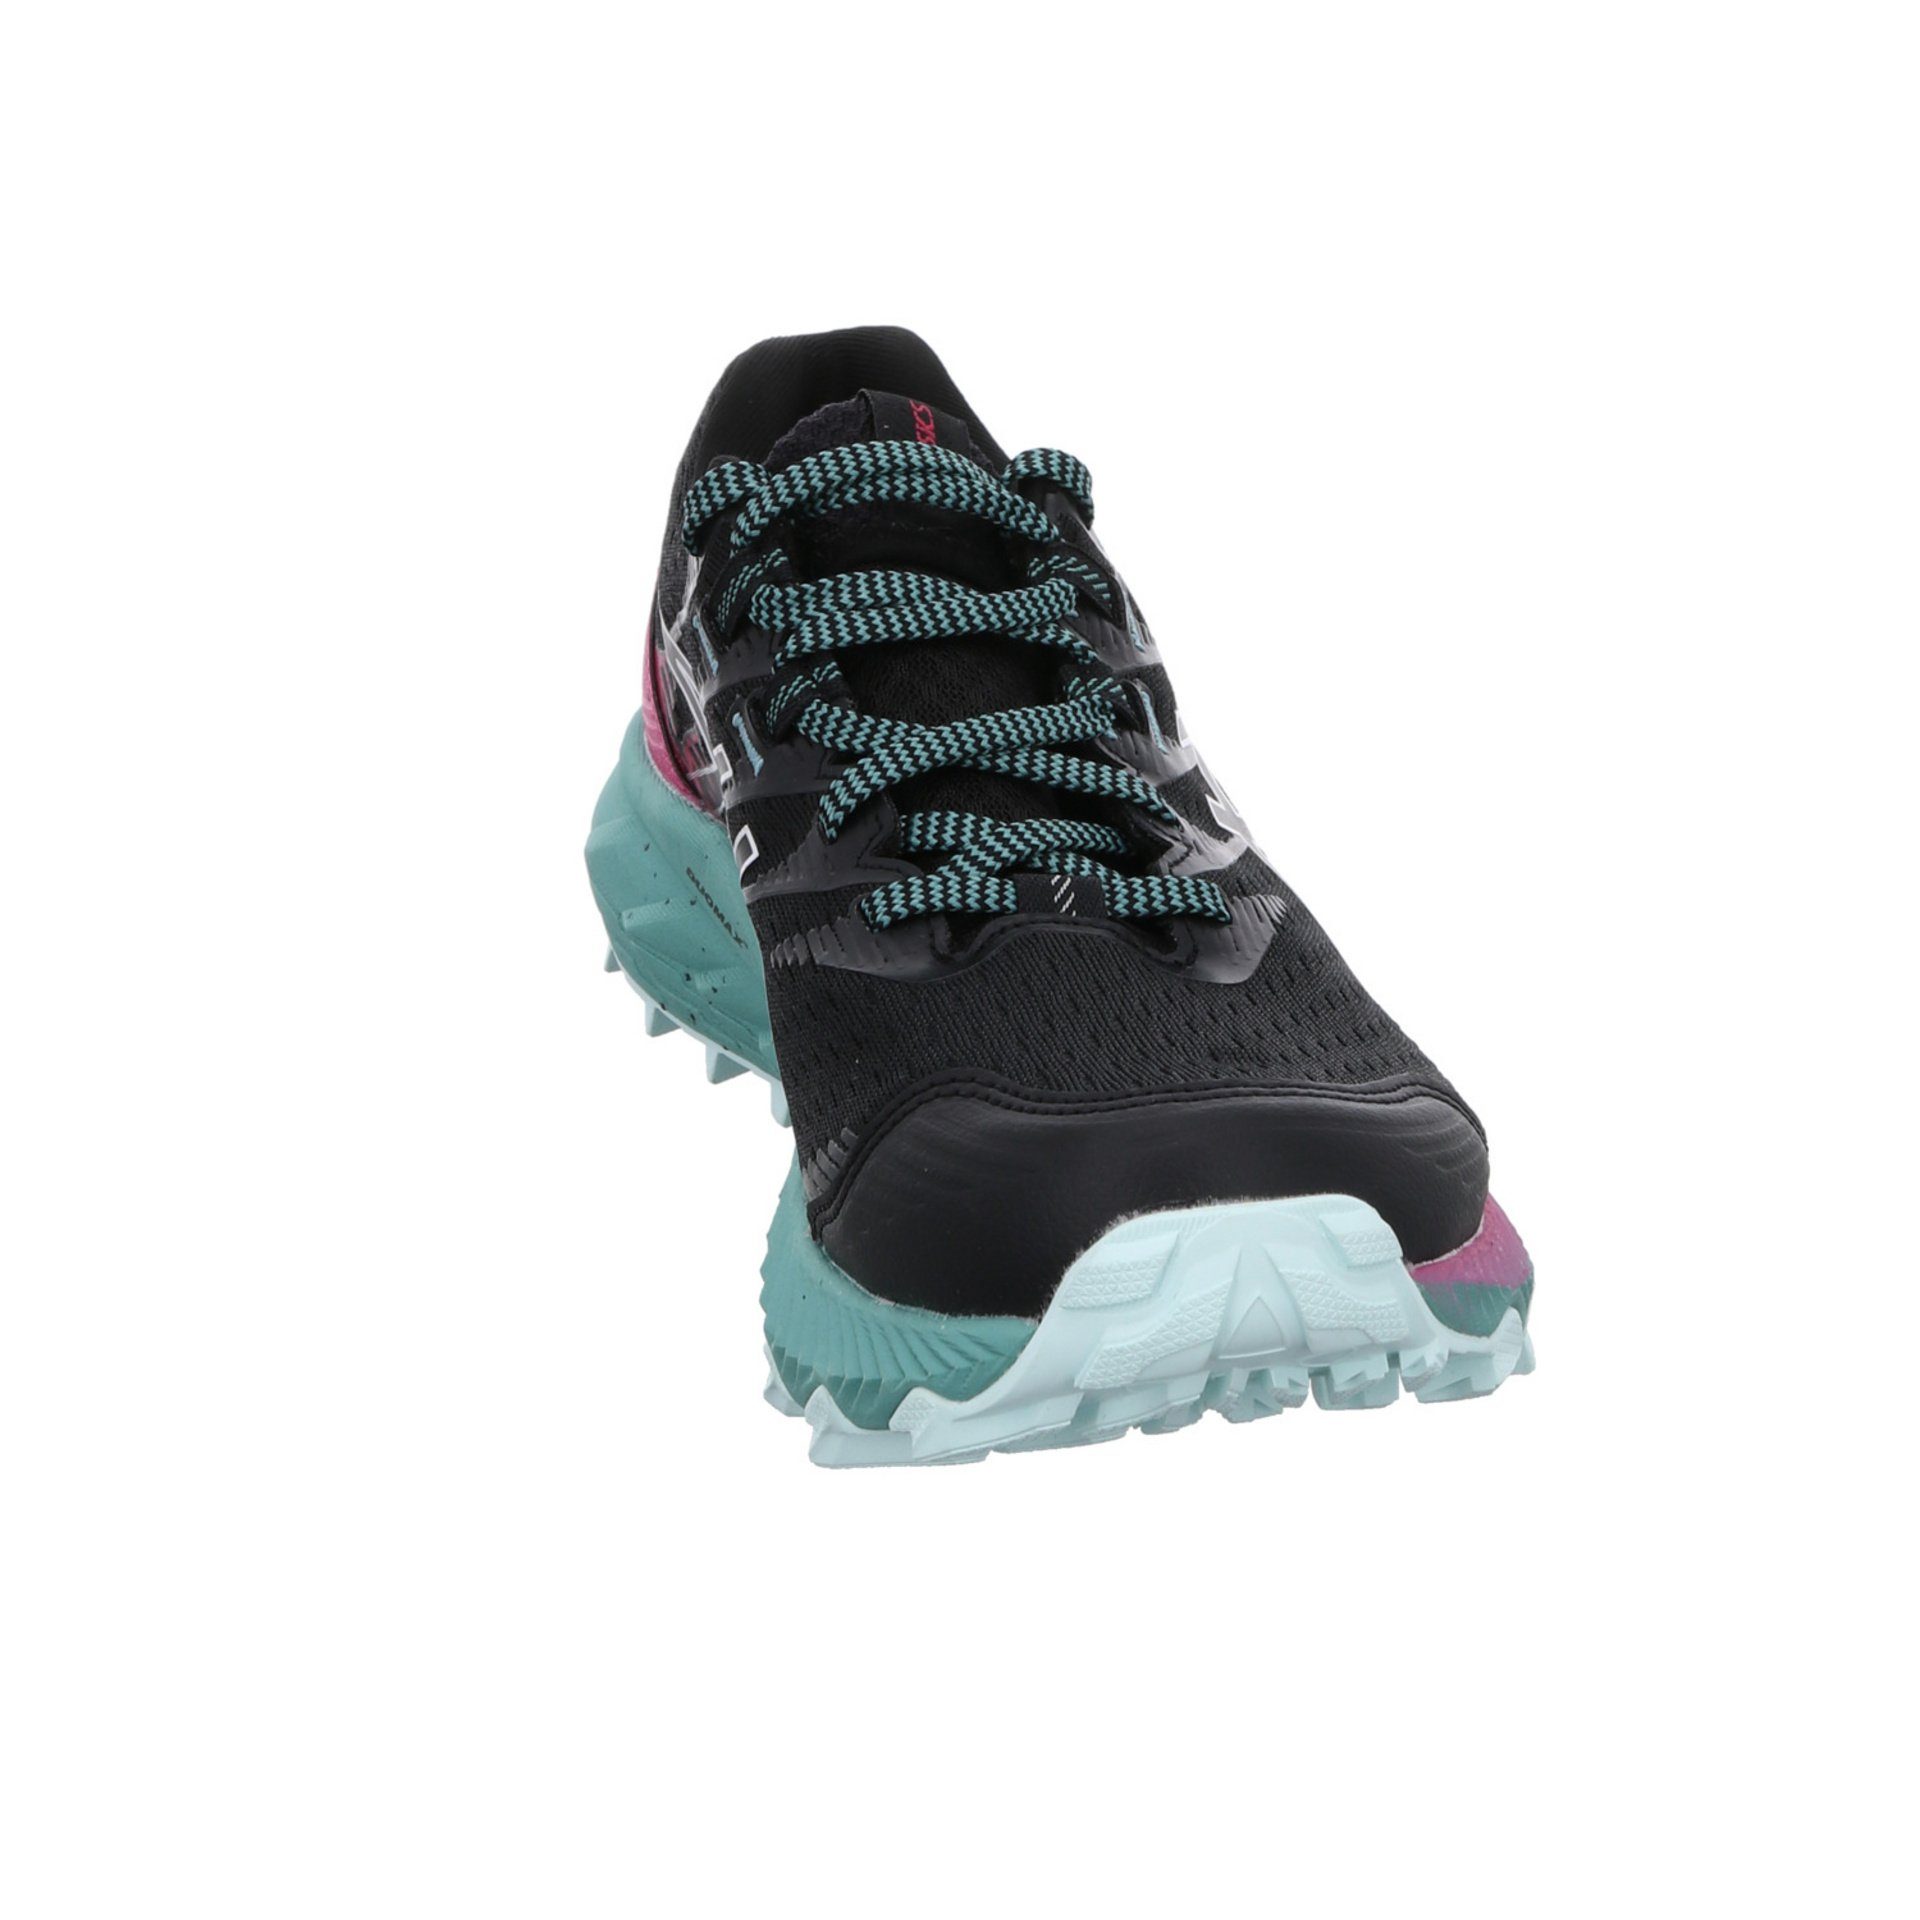 SEA Gel Synthetikkombination Trailrunner Trabuco BLACK/SOOTHING Sneaker Asics 10 GTX